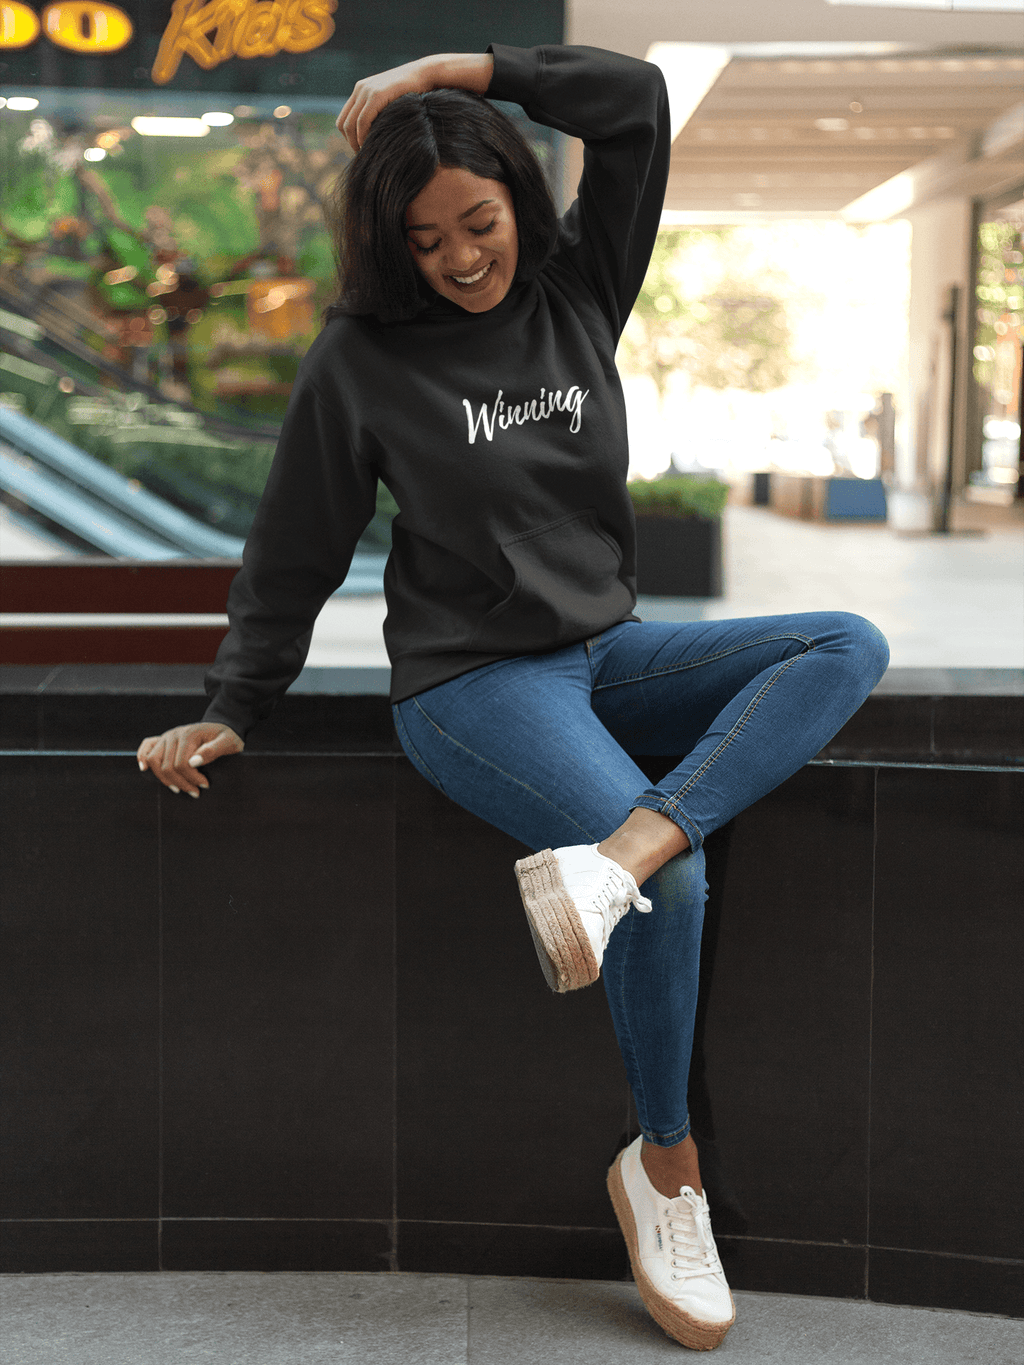 Winning Hoodie - Women Empowerment T-Shirts & Apparel | CP Designs Unlimited